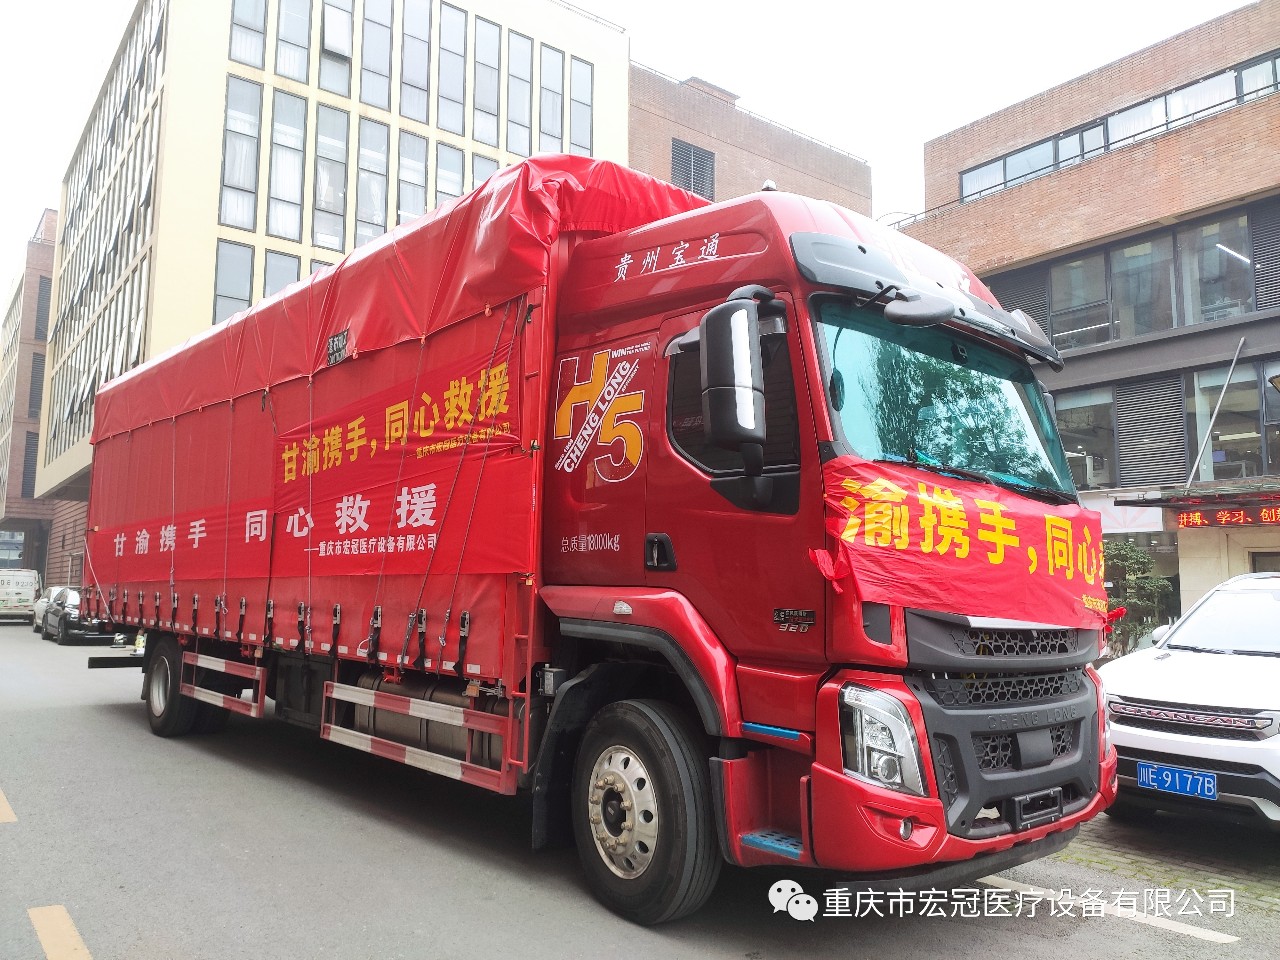 Chongqing Hongguan Medical Equipment Co., Ltd نے گانسو میں آفت زدہ علاقوں کی مدد کے لیے 700,000 یوآن سے زیادہ طبی سامان عطیہ کیا۔